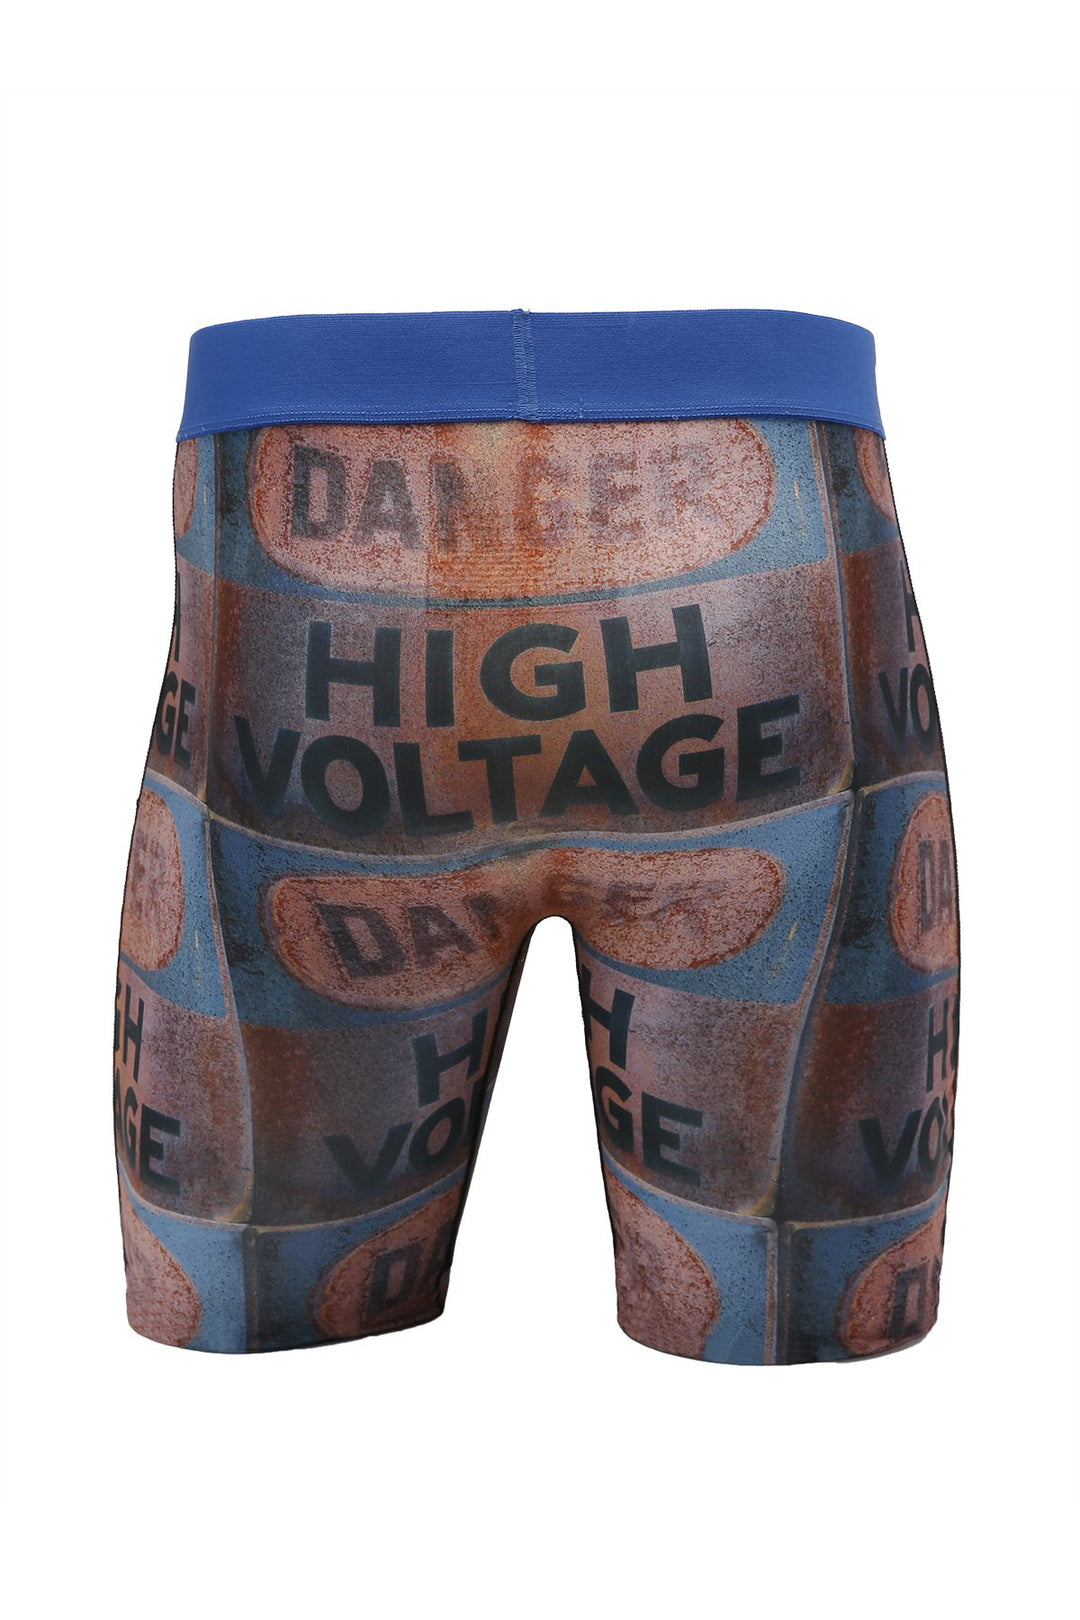 Cinch High Voltage Men's Boxer Briefs – Lazy J Ranch Wear Stores